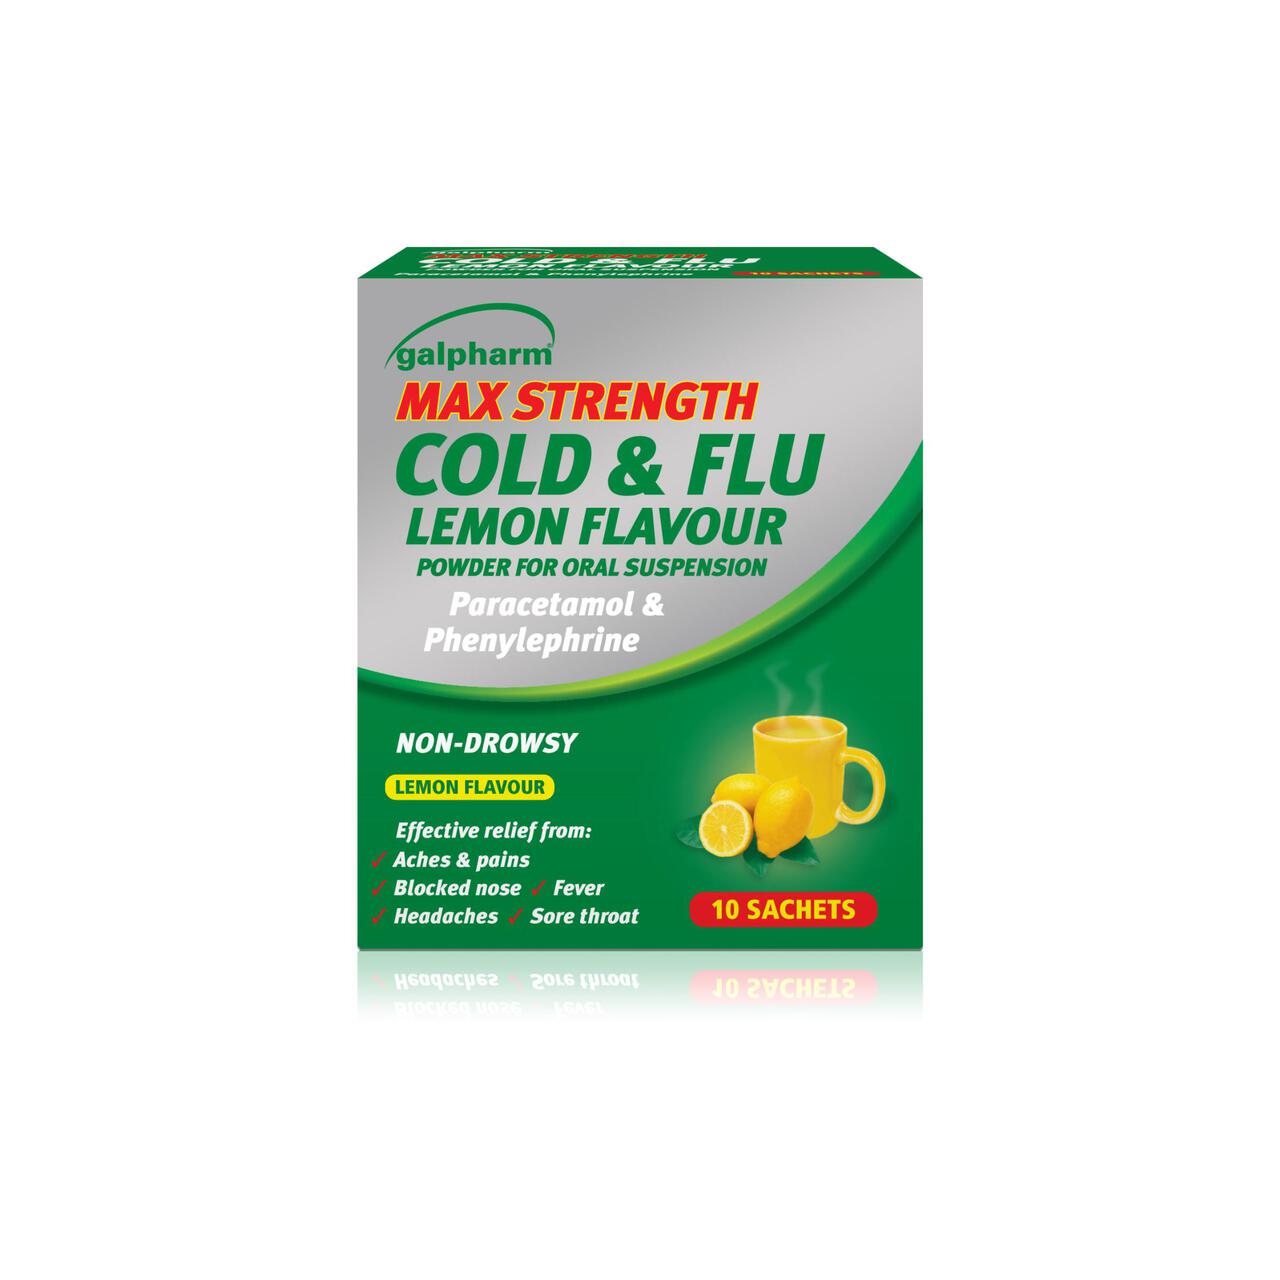 Galpharm Cold & Flu Max Strength Sachets Lemon Flavour 10 per pack